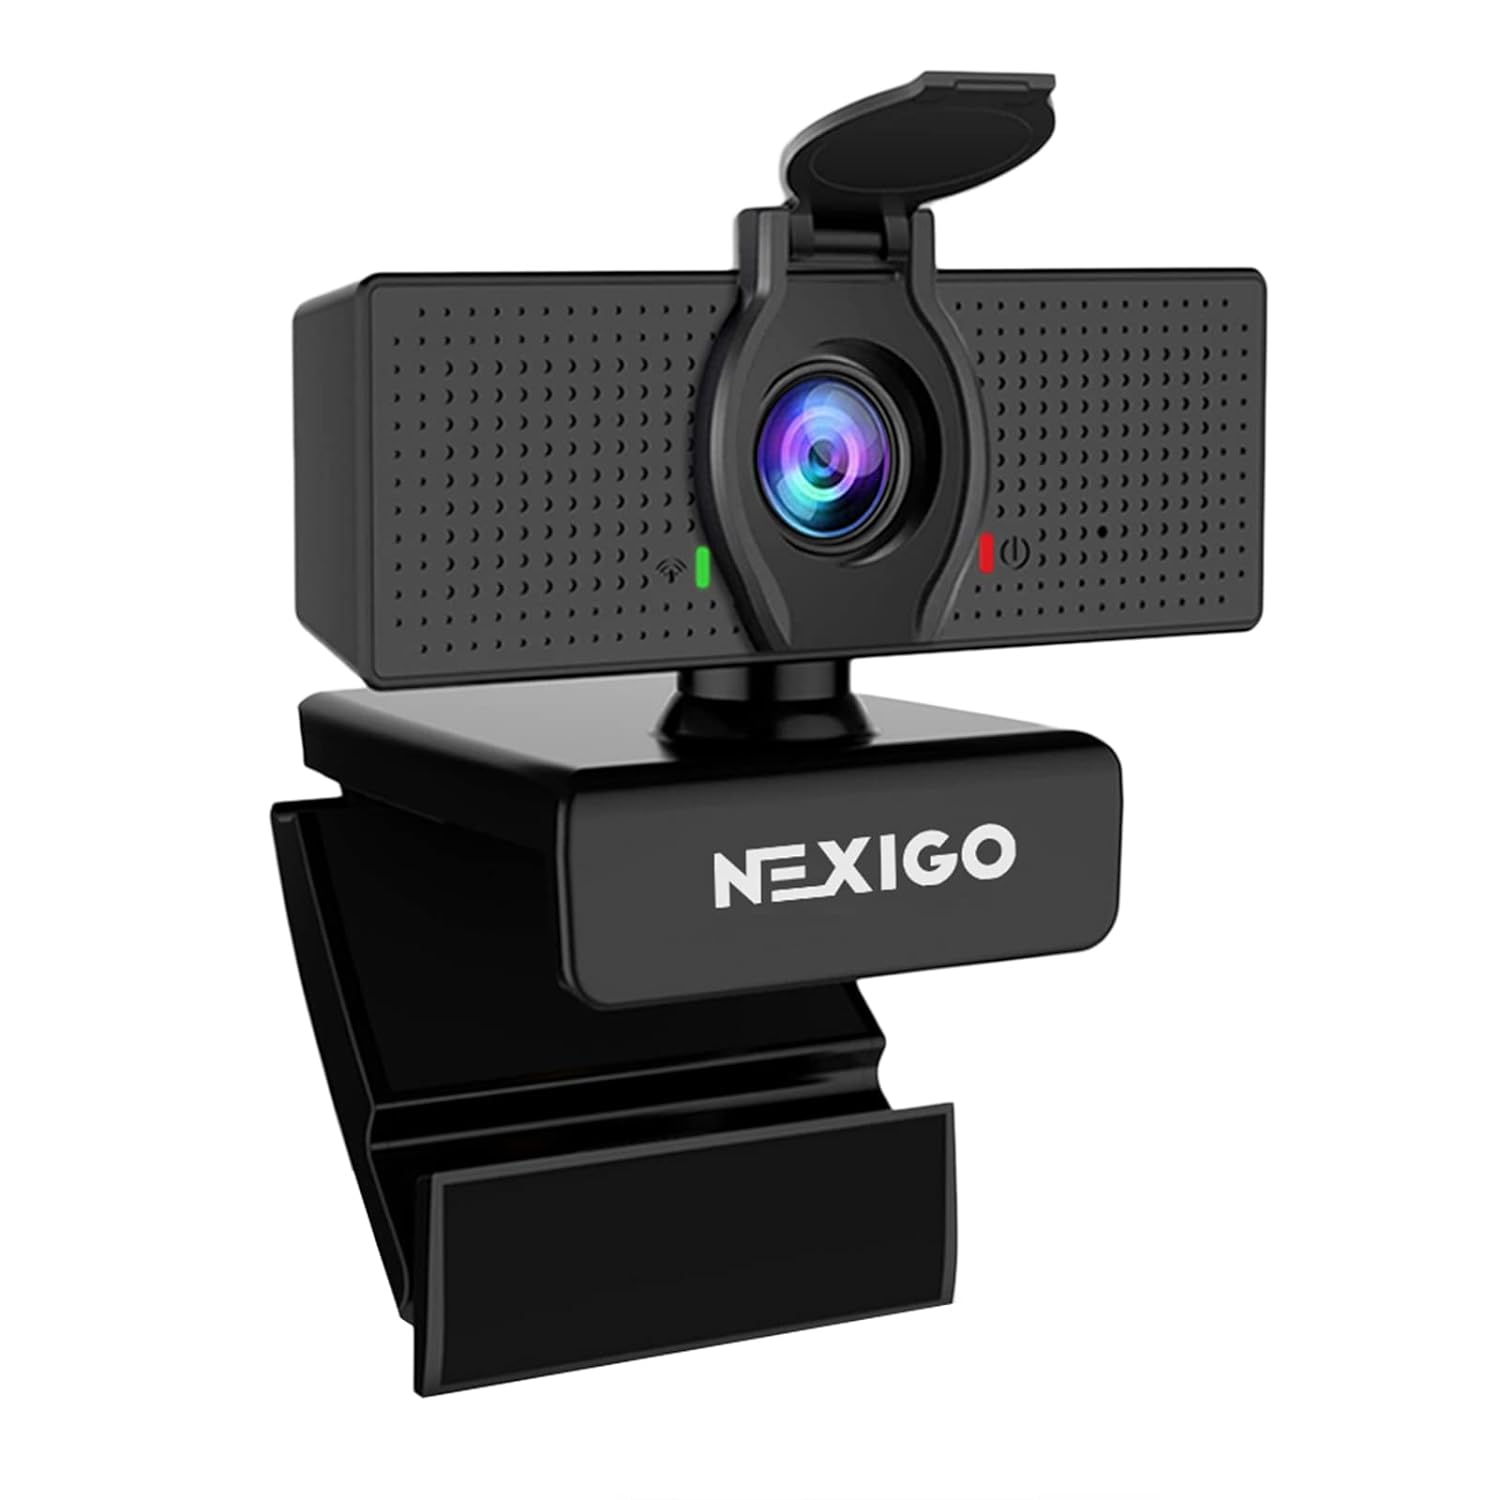 NexiGo 2020 1080P Webcam with Privacy Cover - NexiGo 110-degree Wide Angle Widescreen USB Camera Built-in Dual Stereo Microphone for PC/Mac Laptop/Desktop Streaming Video Calling Recording Conferencing